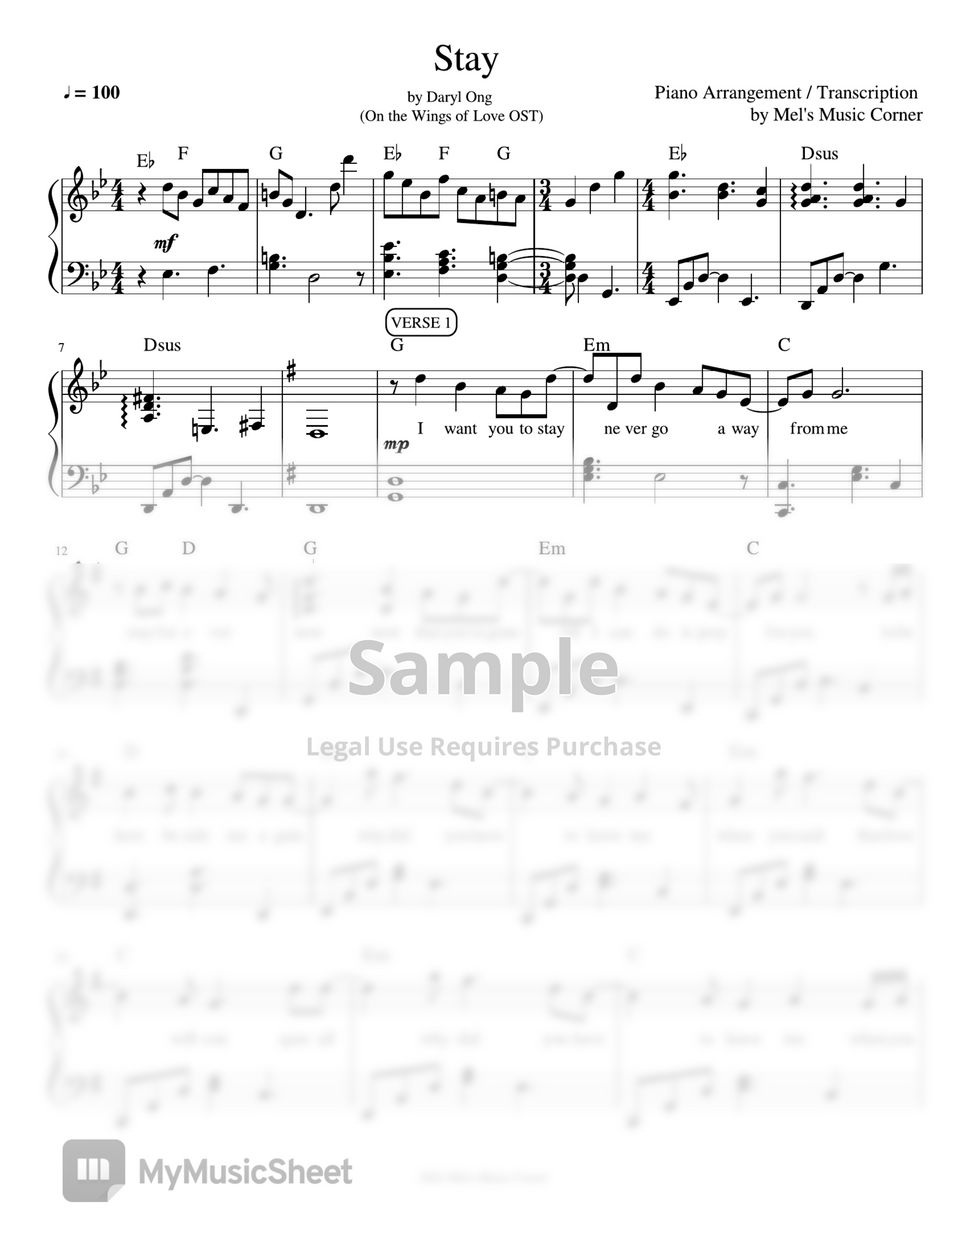 Daryl Ong - Stay (piano sheet music) by Mel's Music Corner